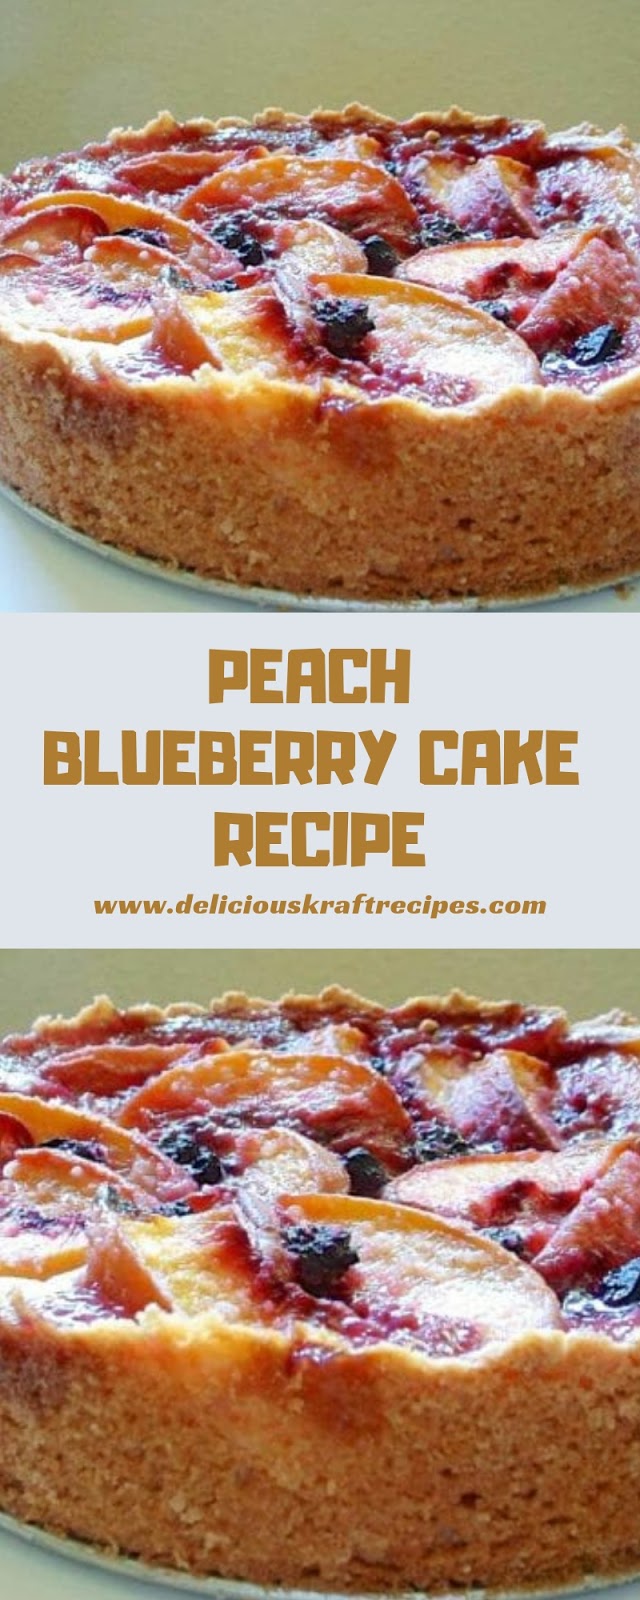 PEACH BLUEBERRY CAKE RECIPE